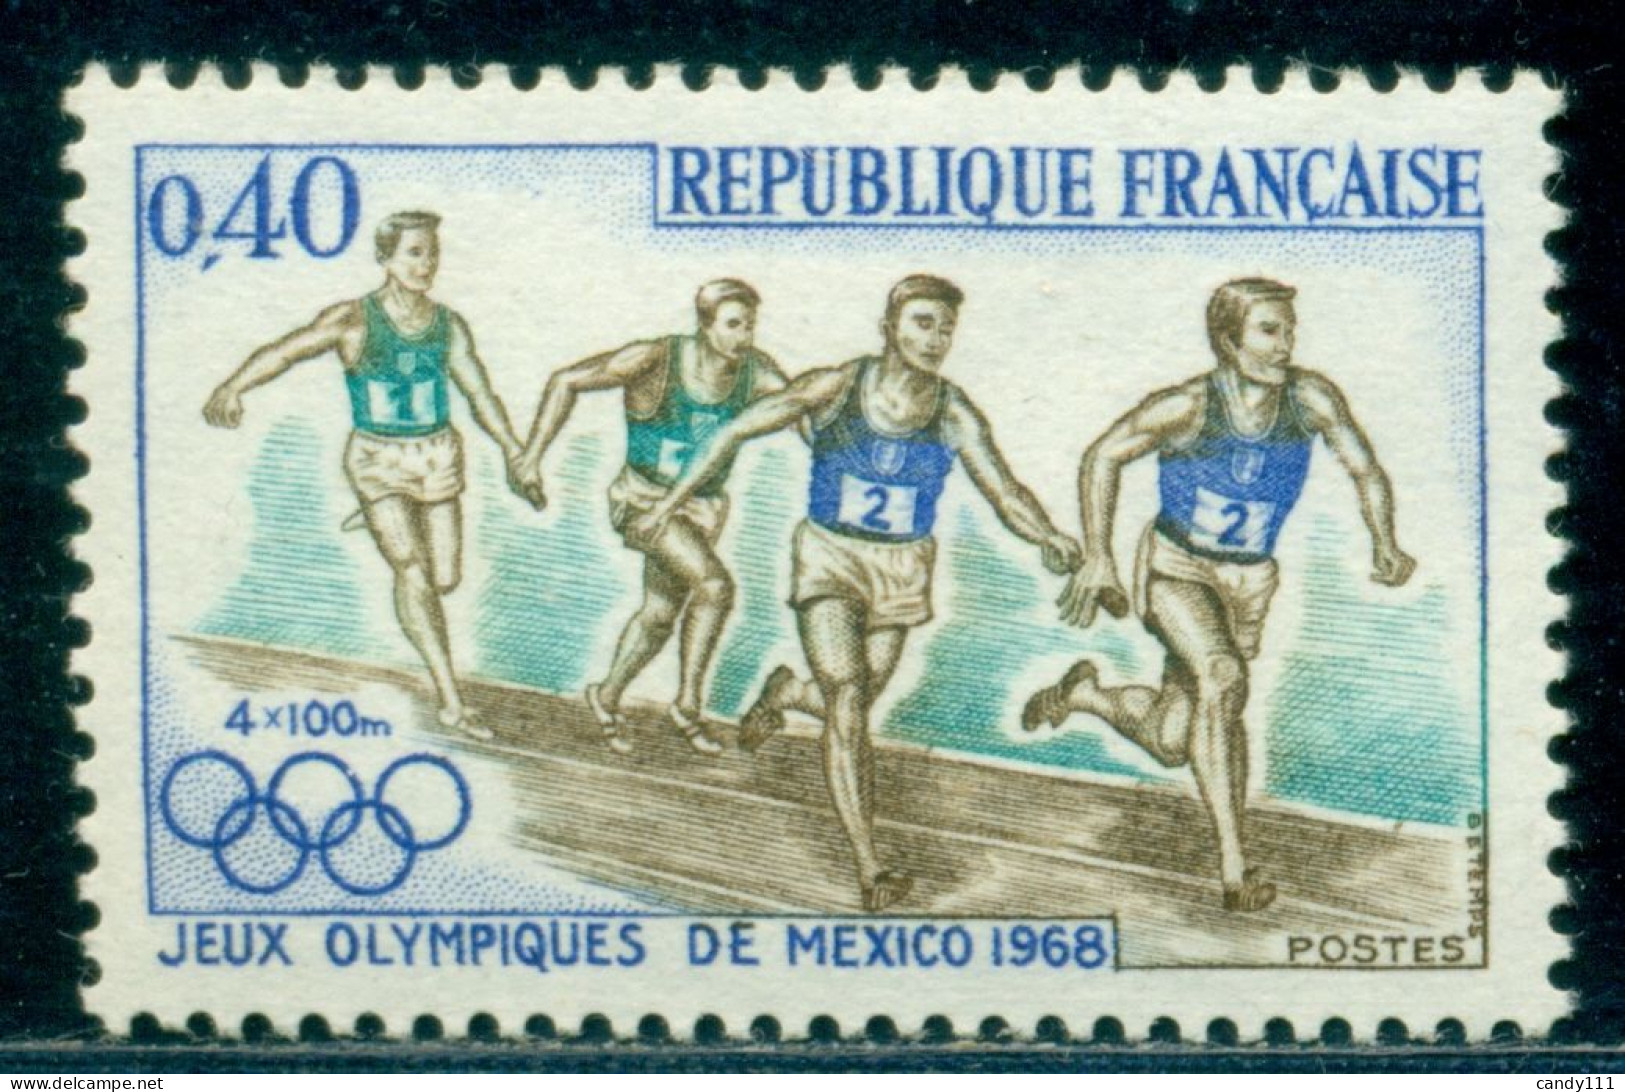 1968 Mexico Olympics,relay Race,handing Over The Baton,sport,France,Mi.1638 ,MNH - Ete 1968: Mexico